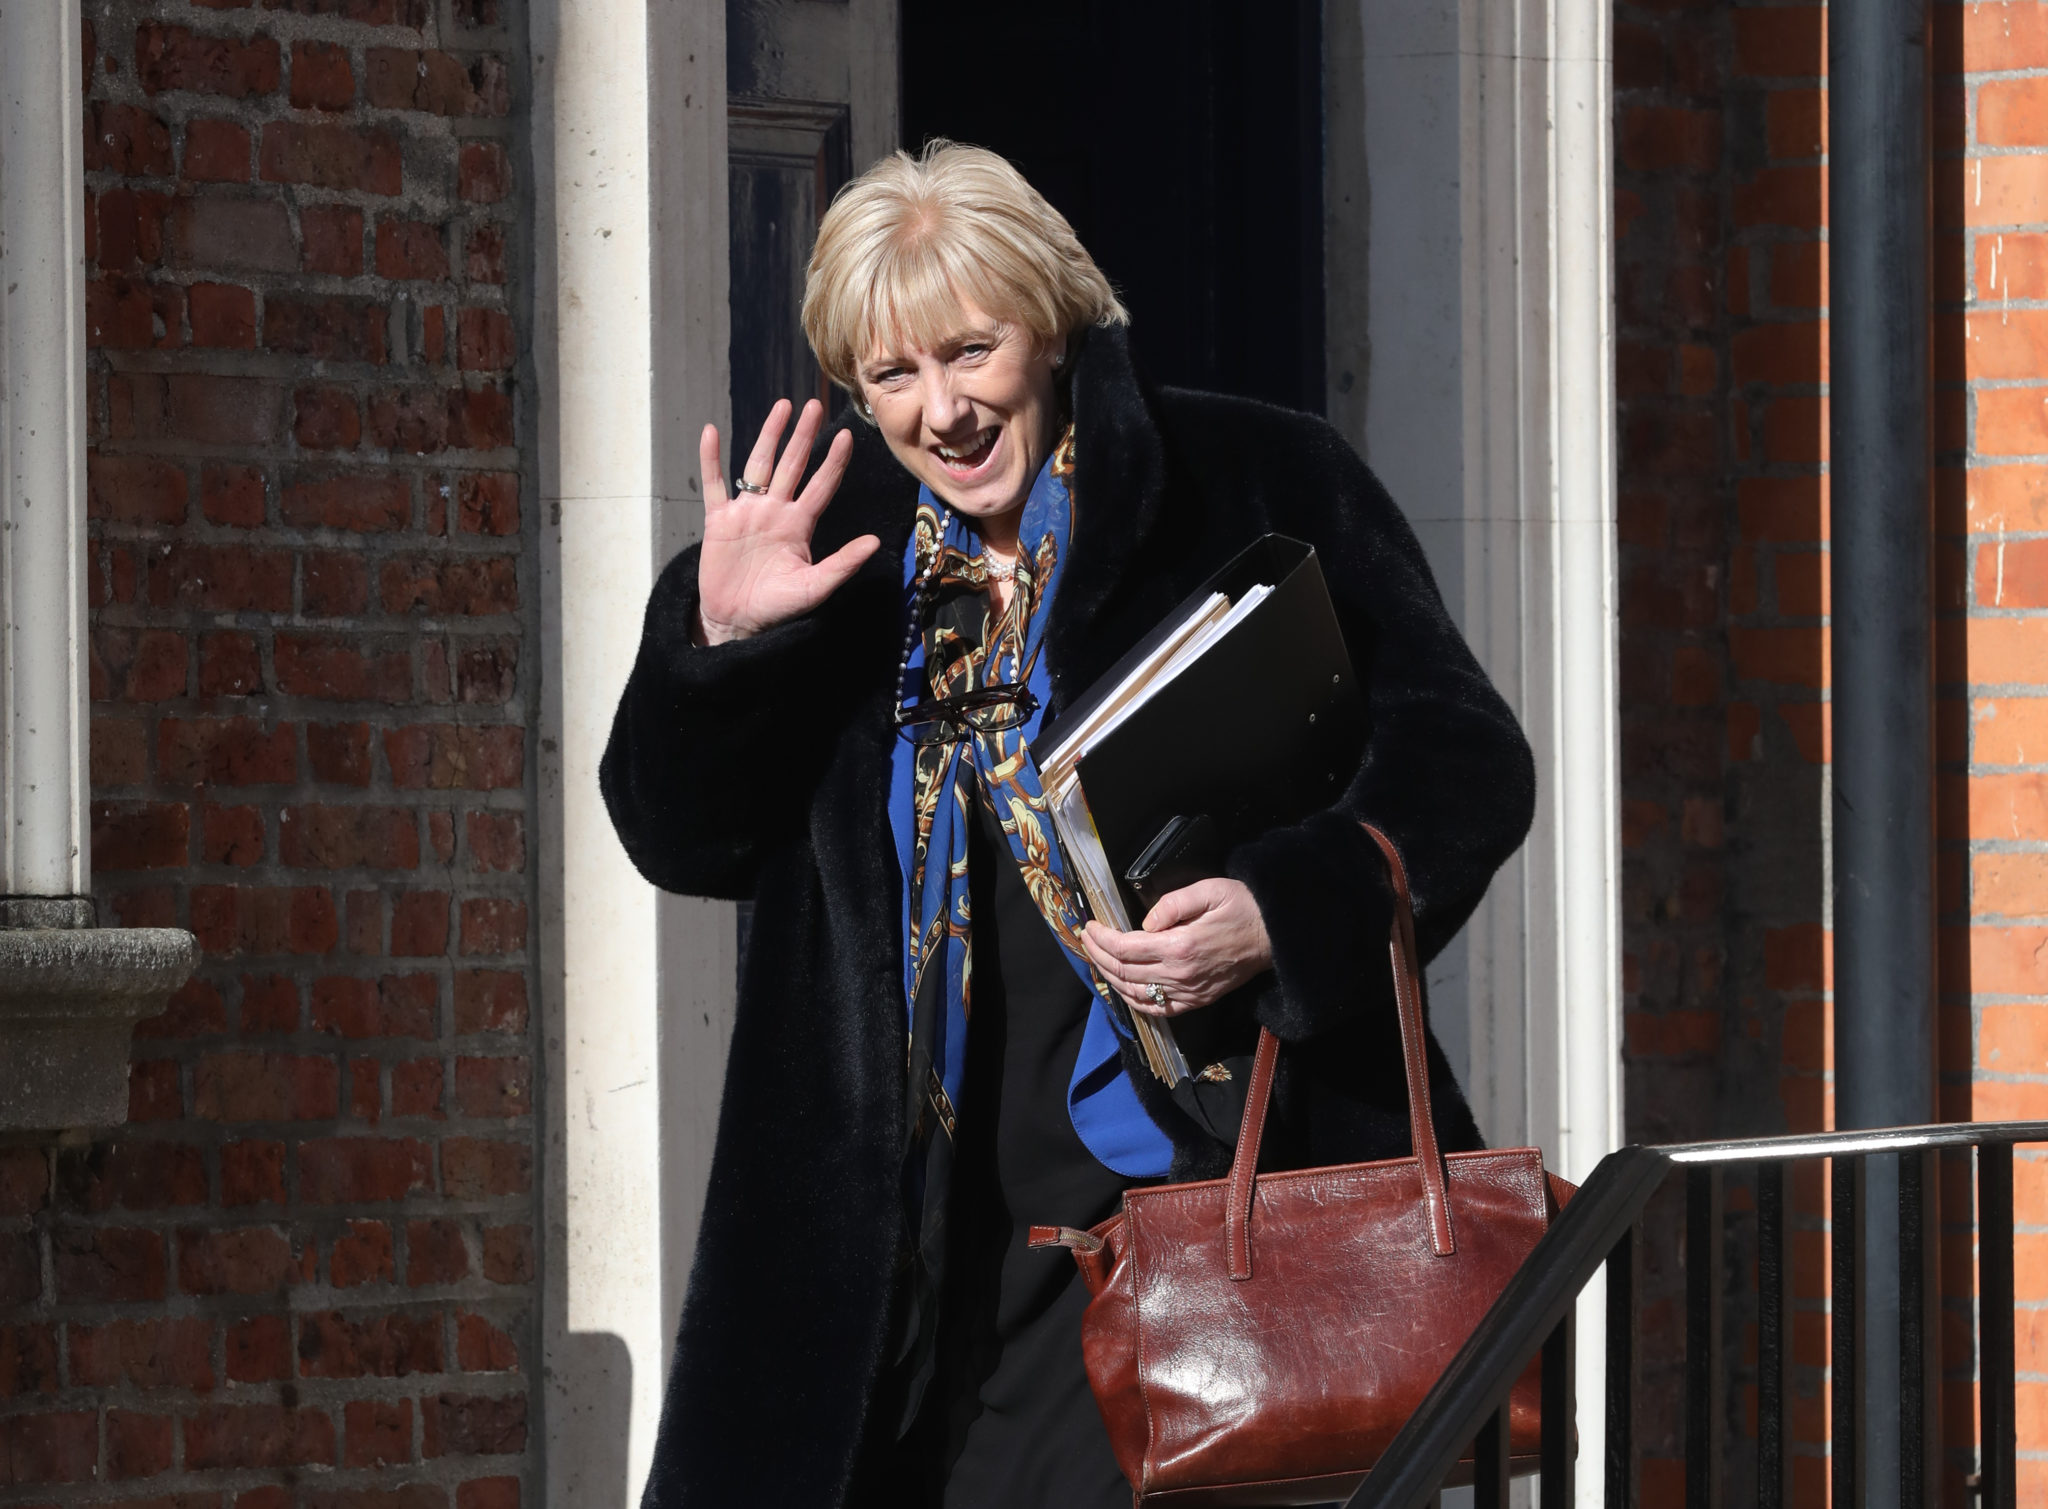 The Social Protection Minister Heather Humphreys leaving Dublin Castle after Cabinet. Image: Sasko Lazarov/RollingNews